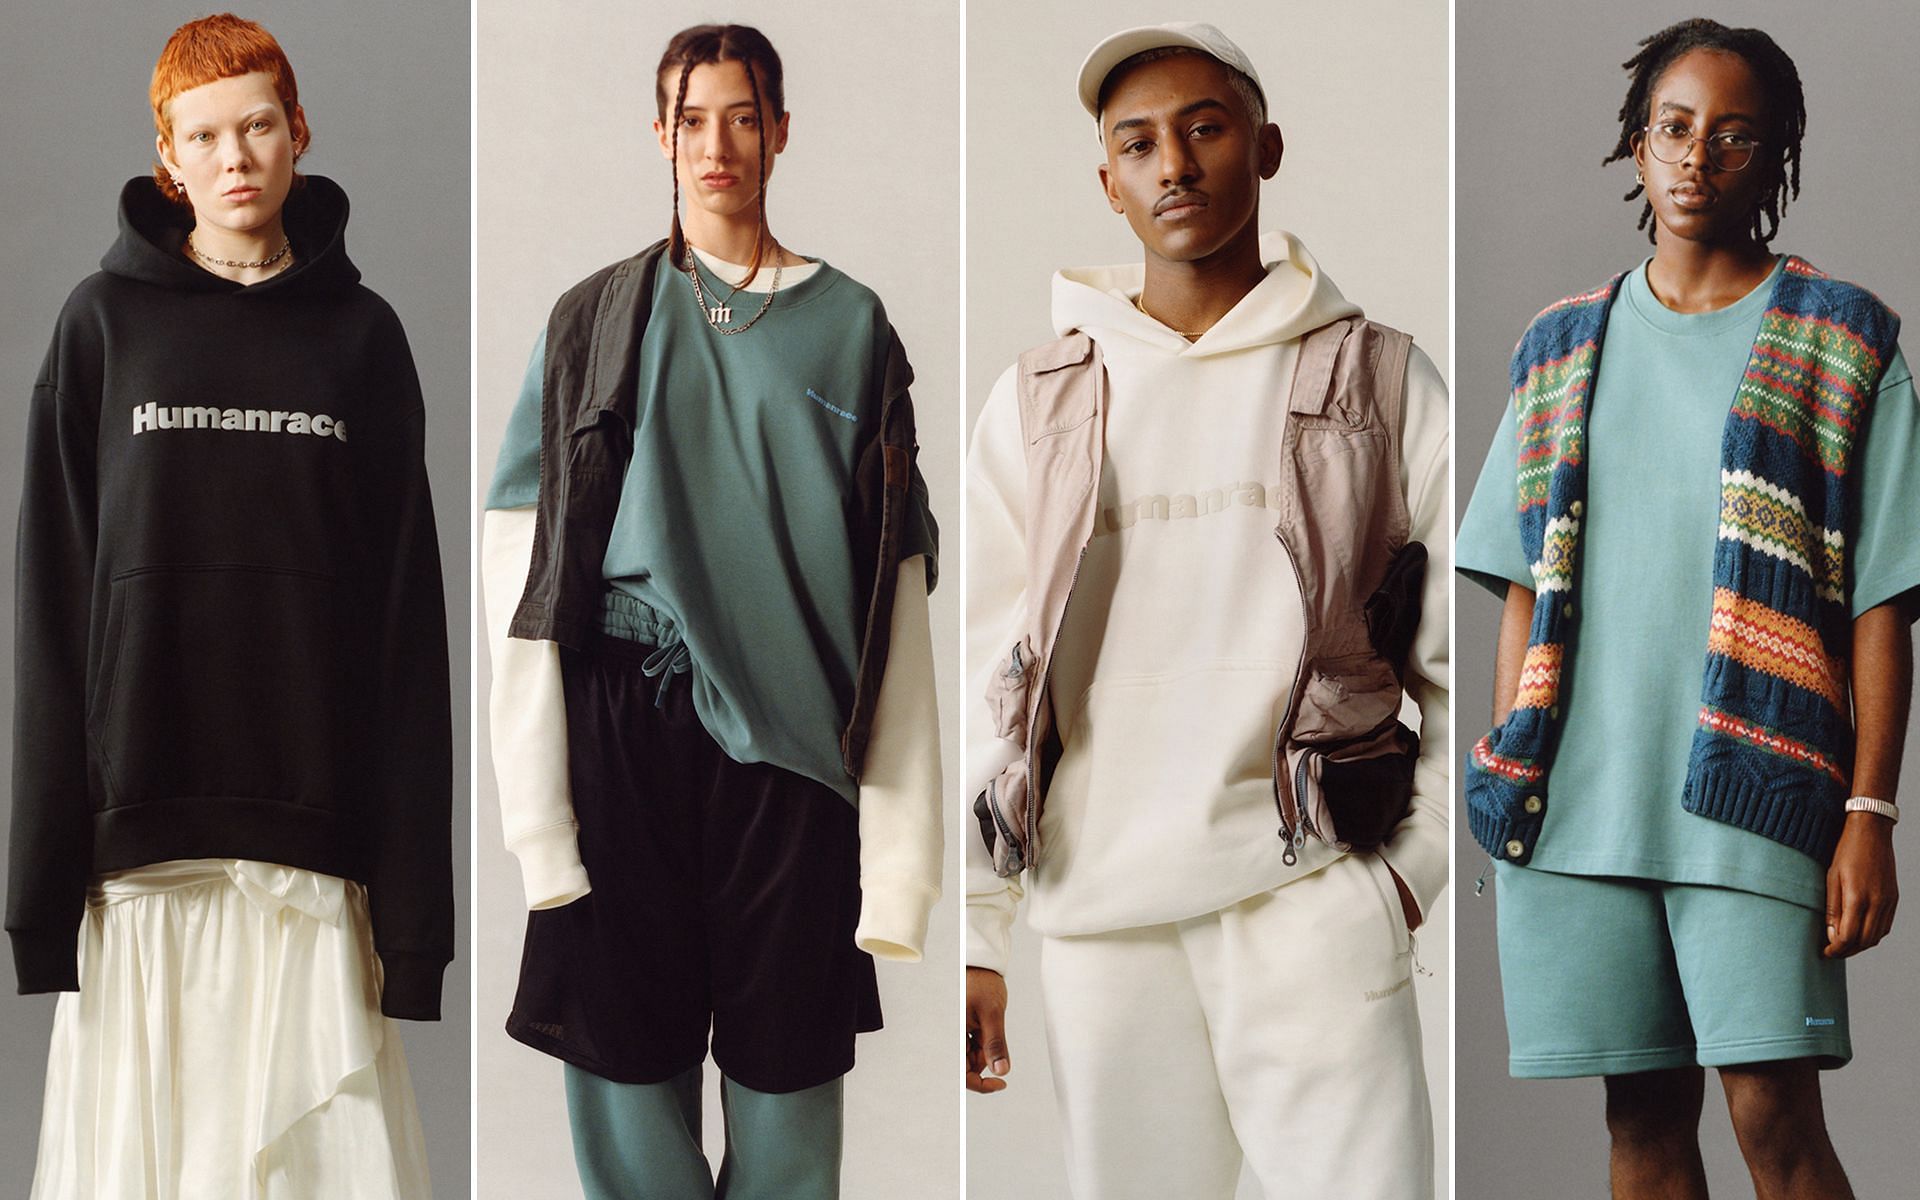 Adidas x Pharrell Williams launched their Humanrace Premium Basics collection on April 7 (Image via Adidas)